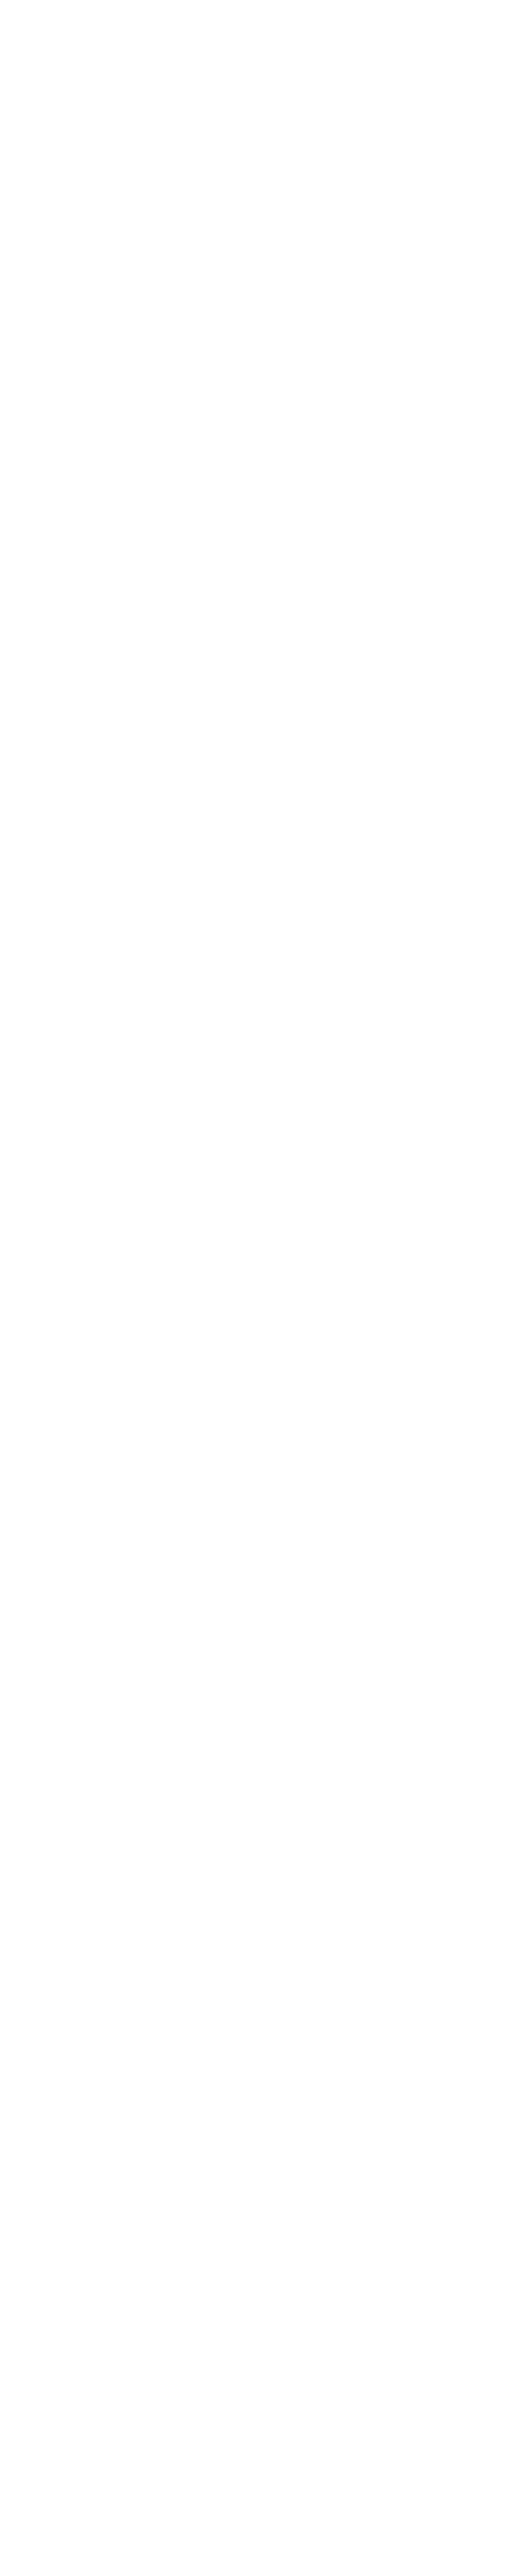 Passma orange black White simple logo site